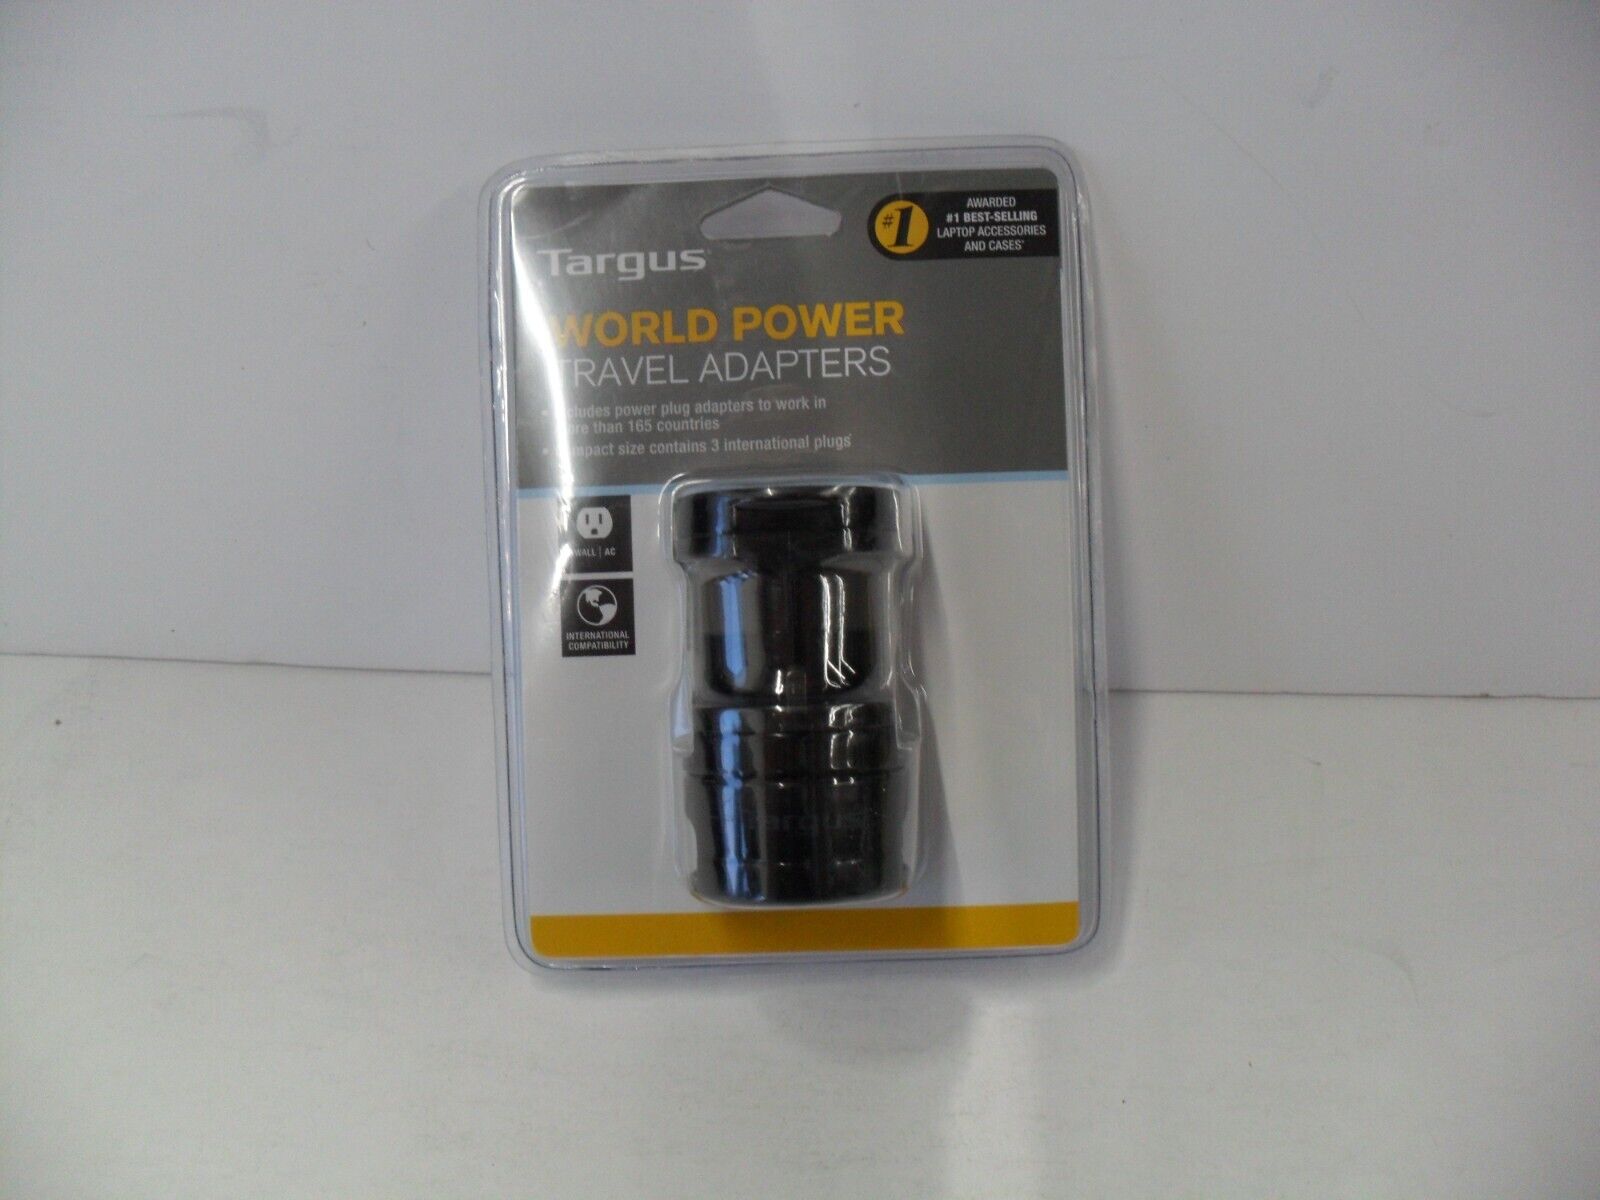 Targus World Power Travel Adapter - APK01US1 (NEW)